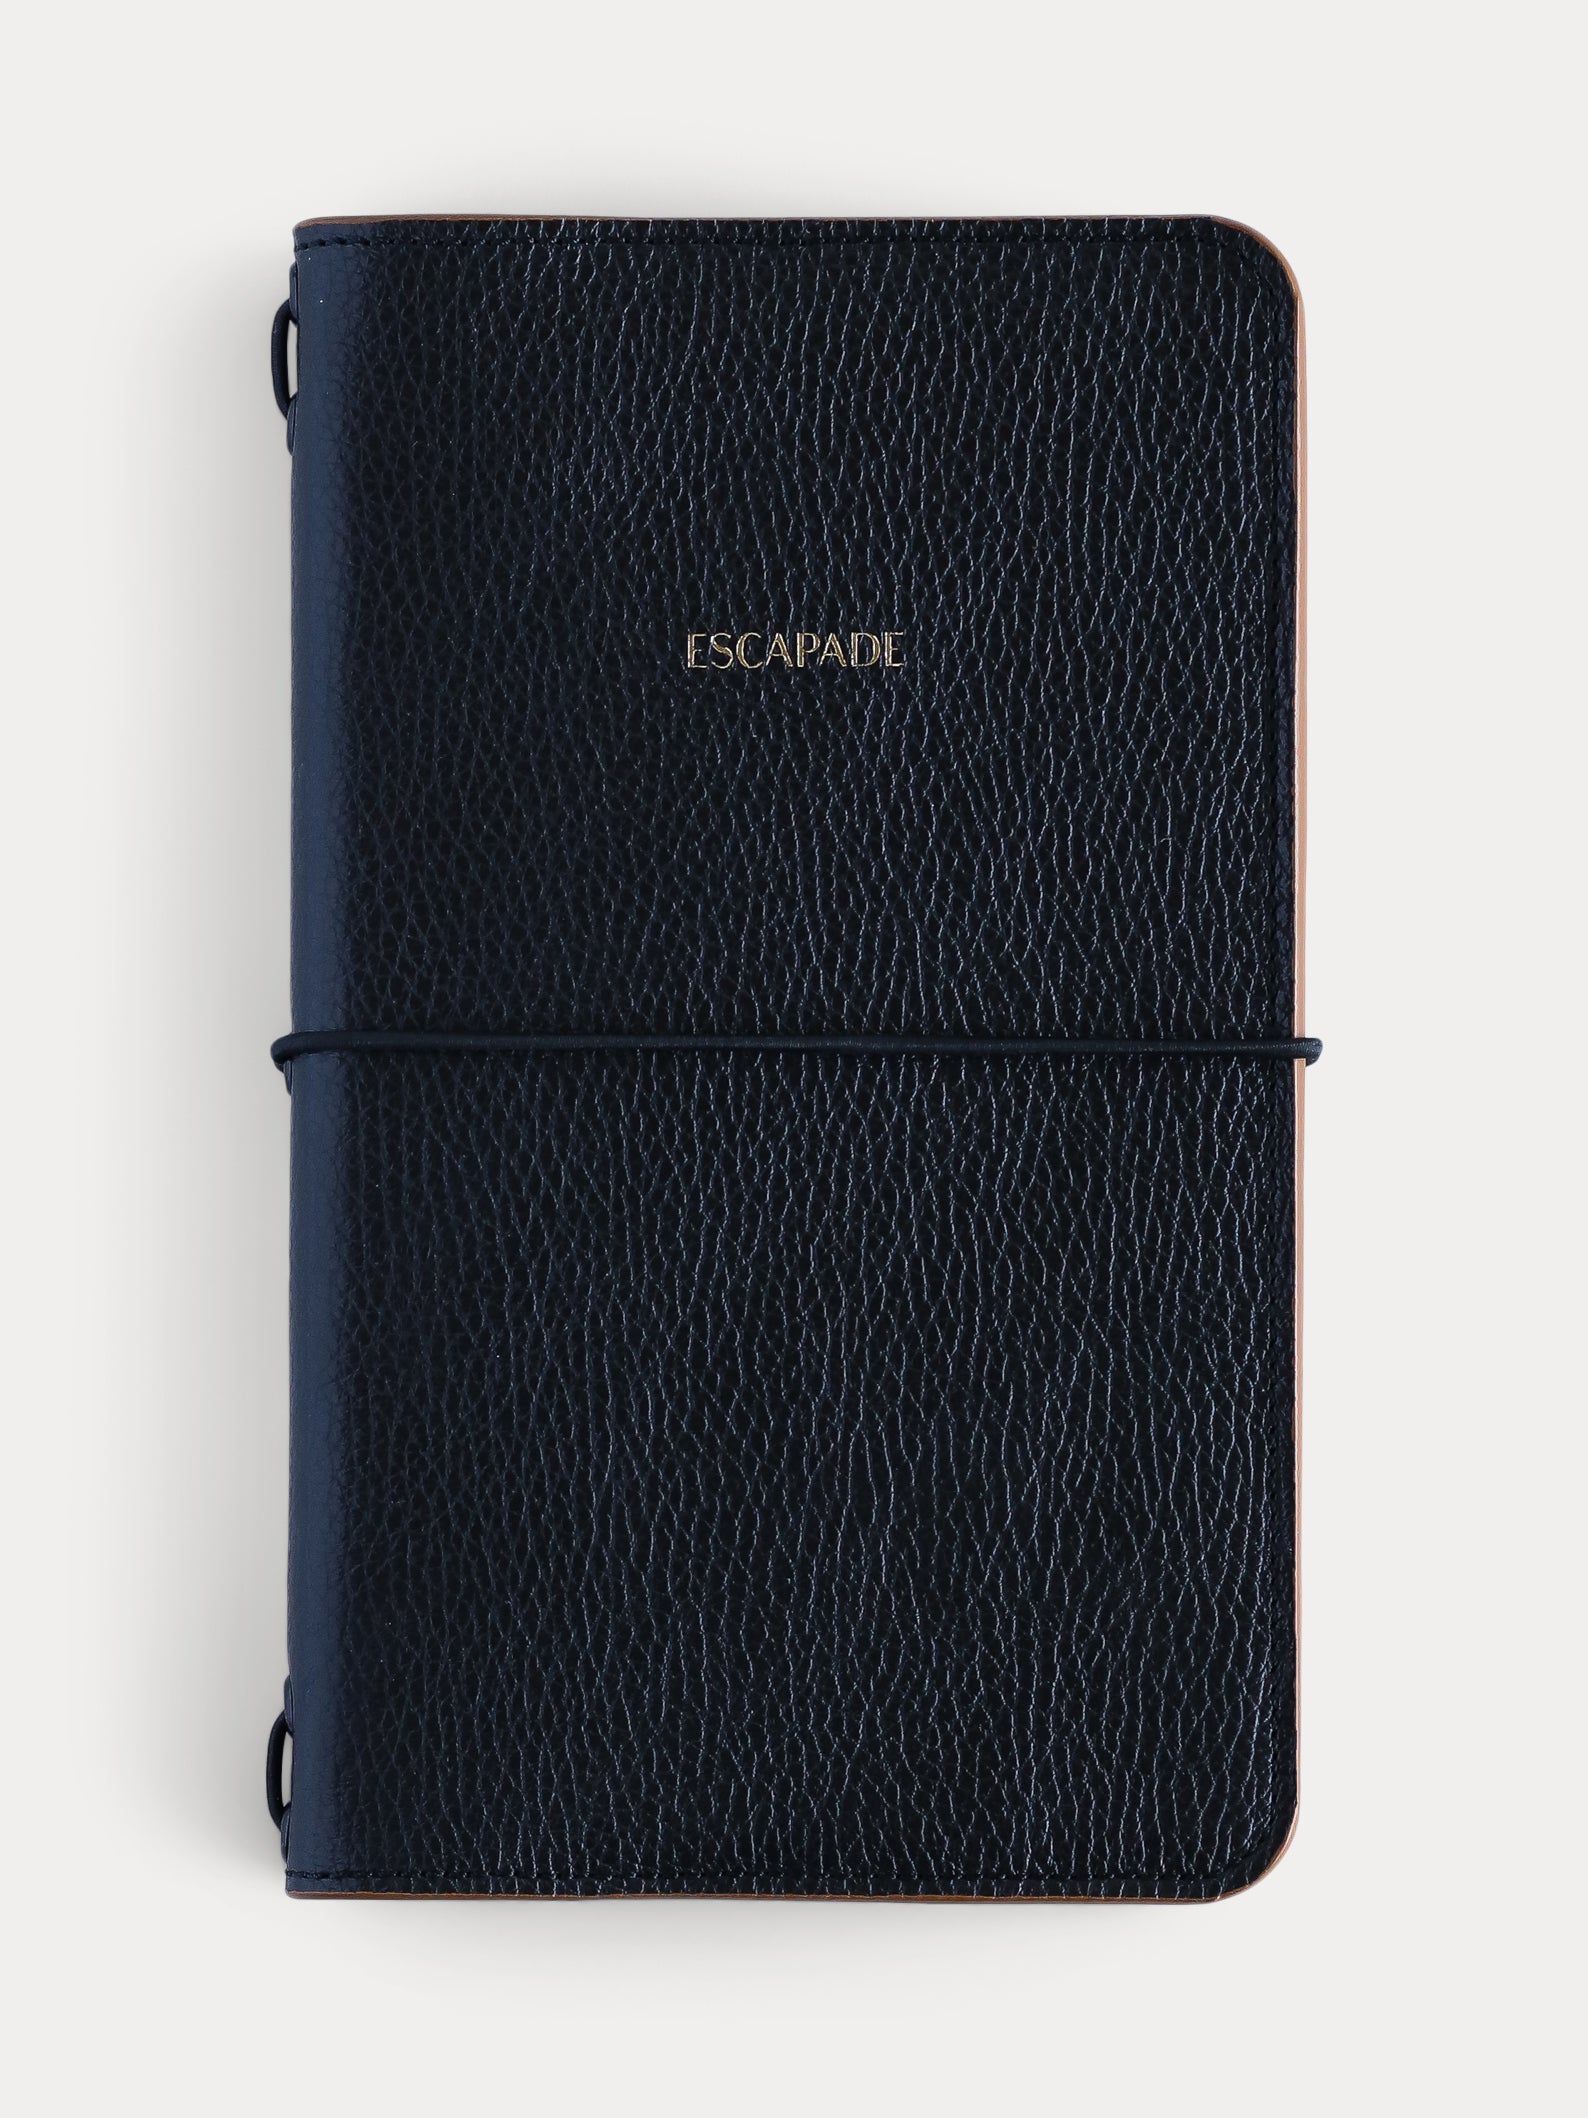 handmade-black-leather-notebook